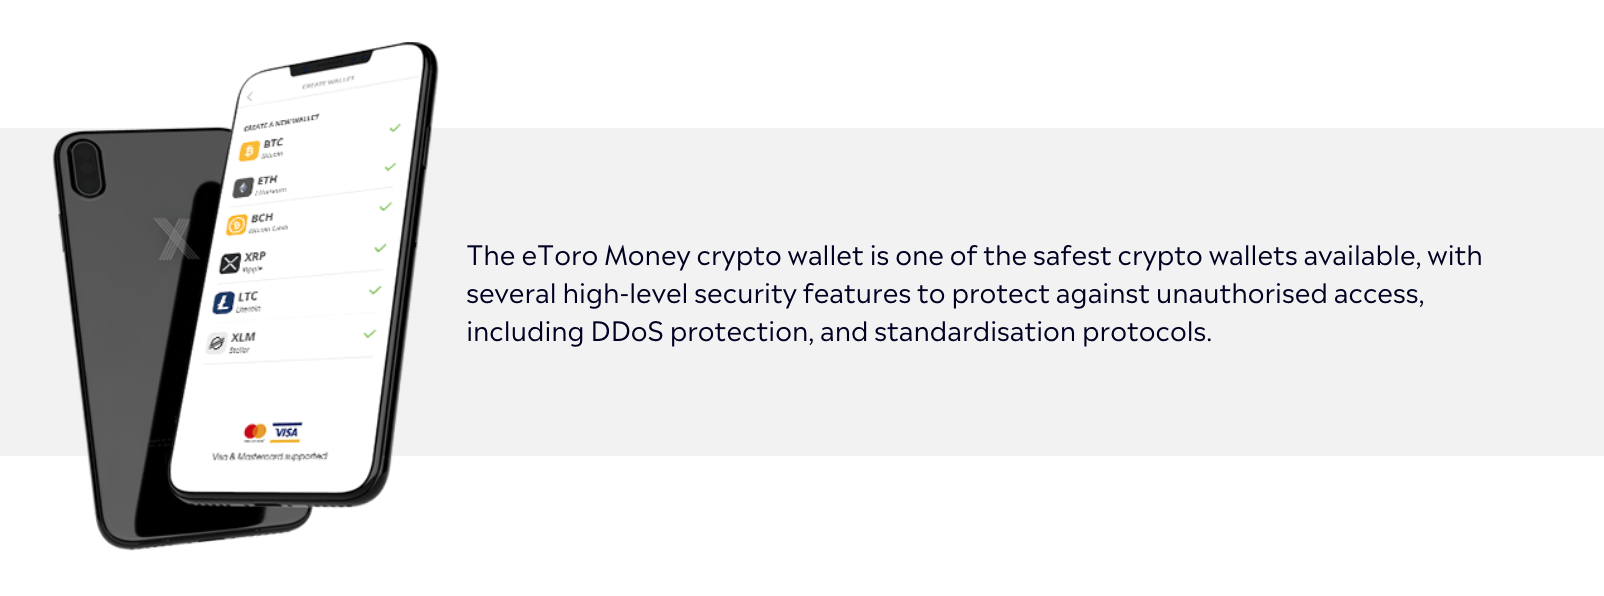 eToro Money crypto wallet